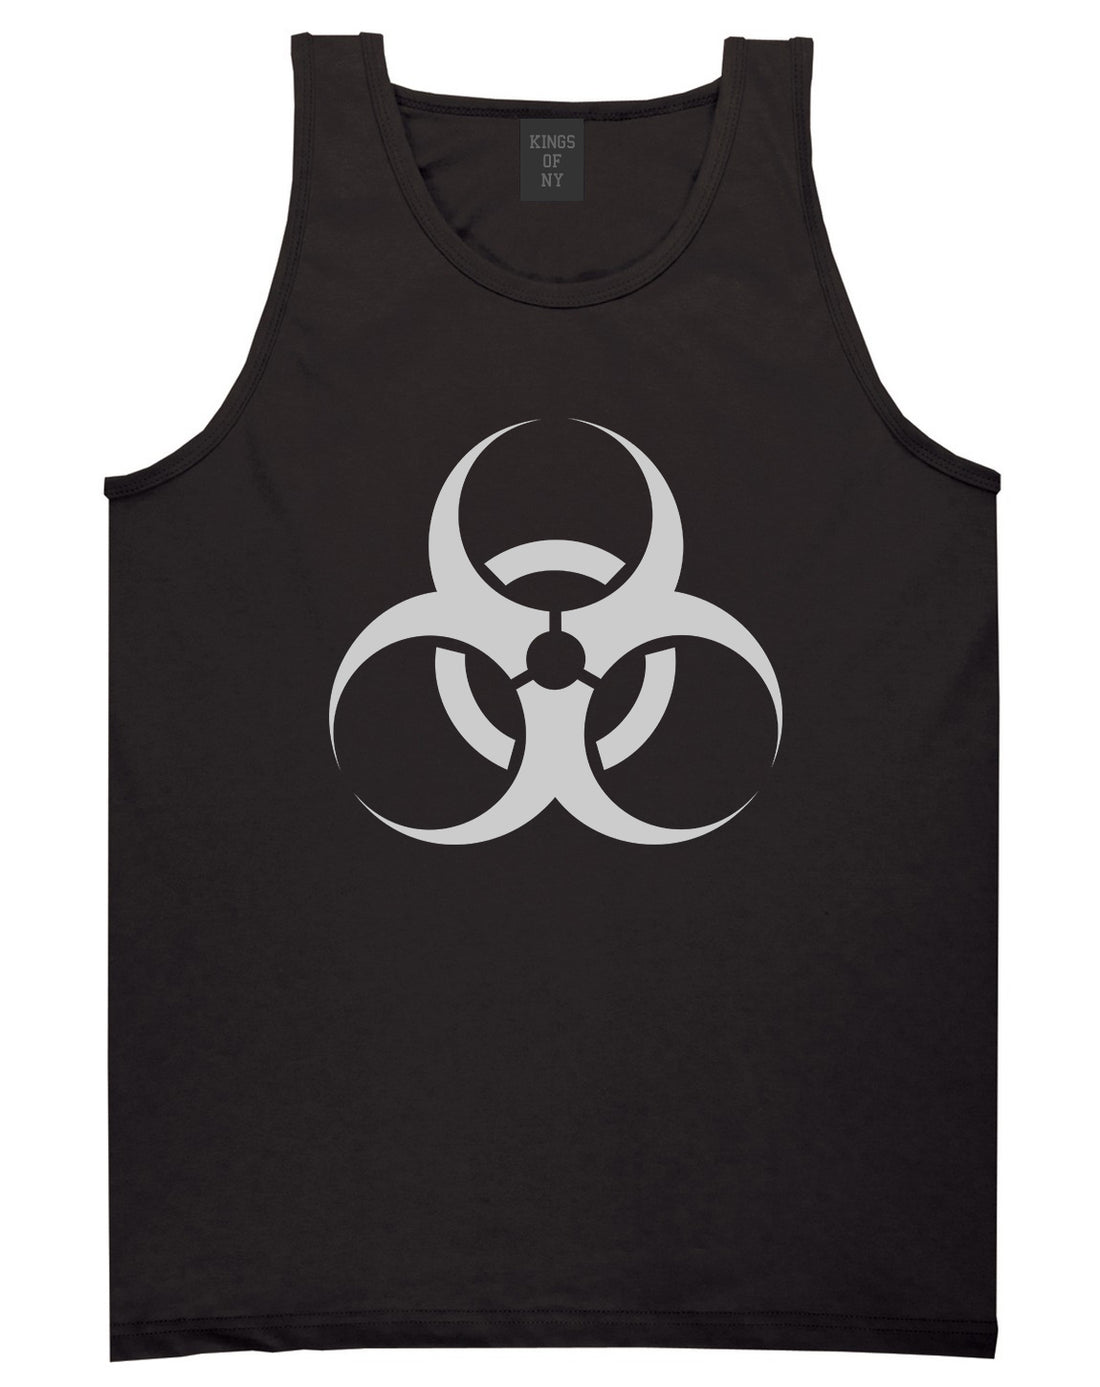 Biohazard Symbol Black Tank Top Shirt by Kings Of NY